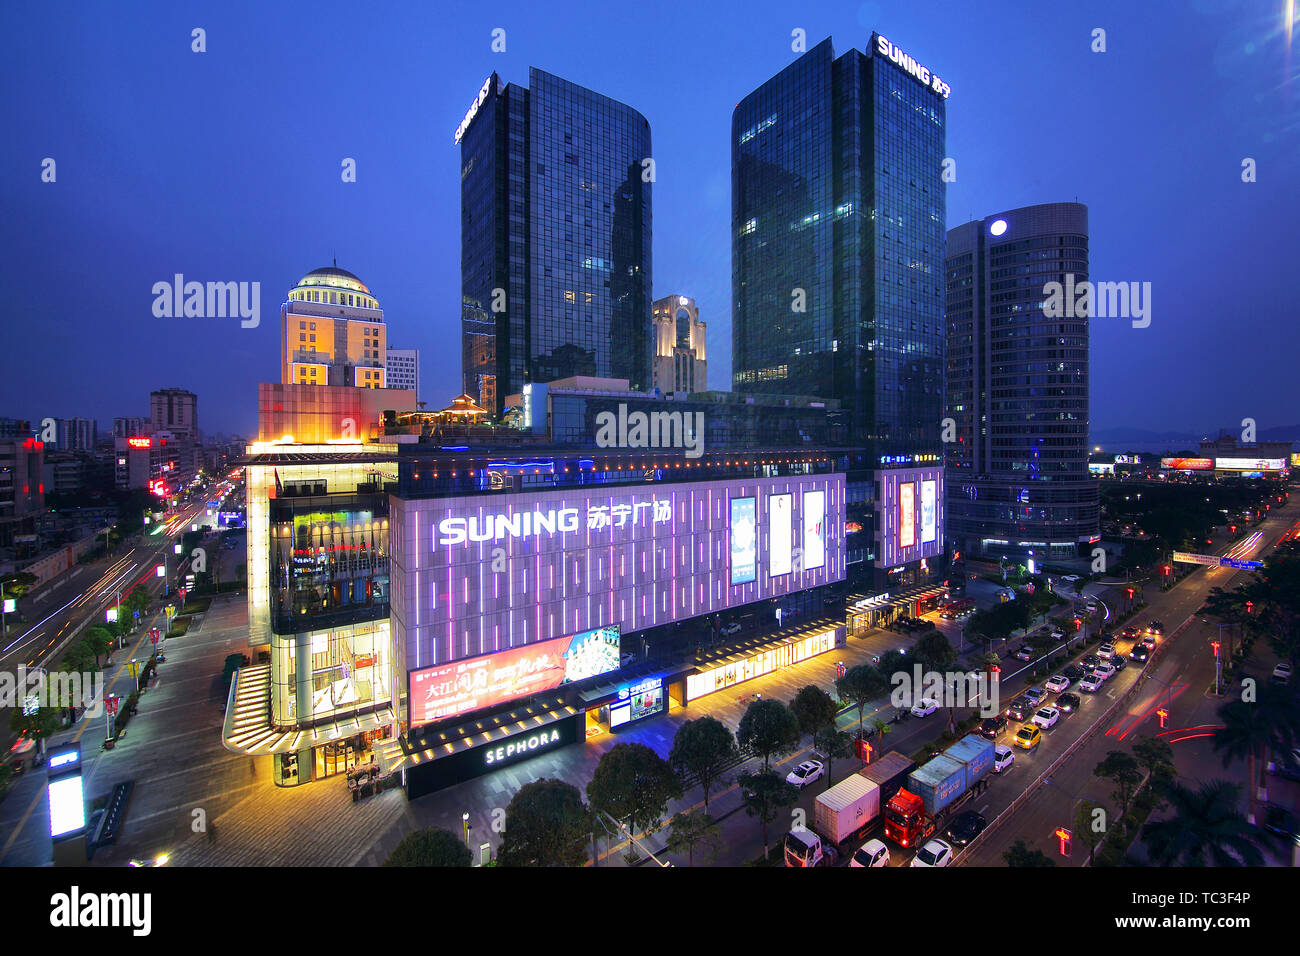 Night view of Suning Plaza, Shantou Stock Photo